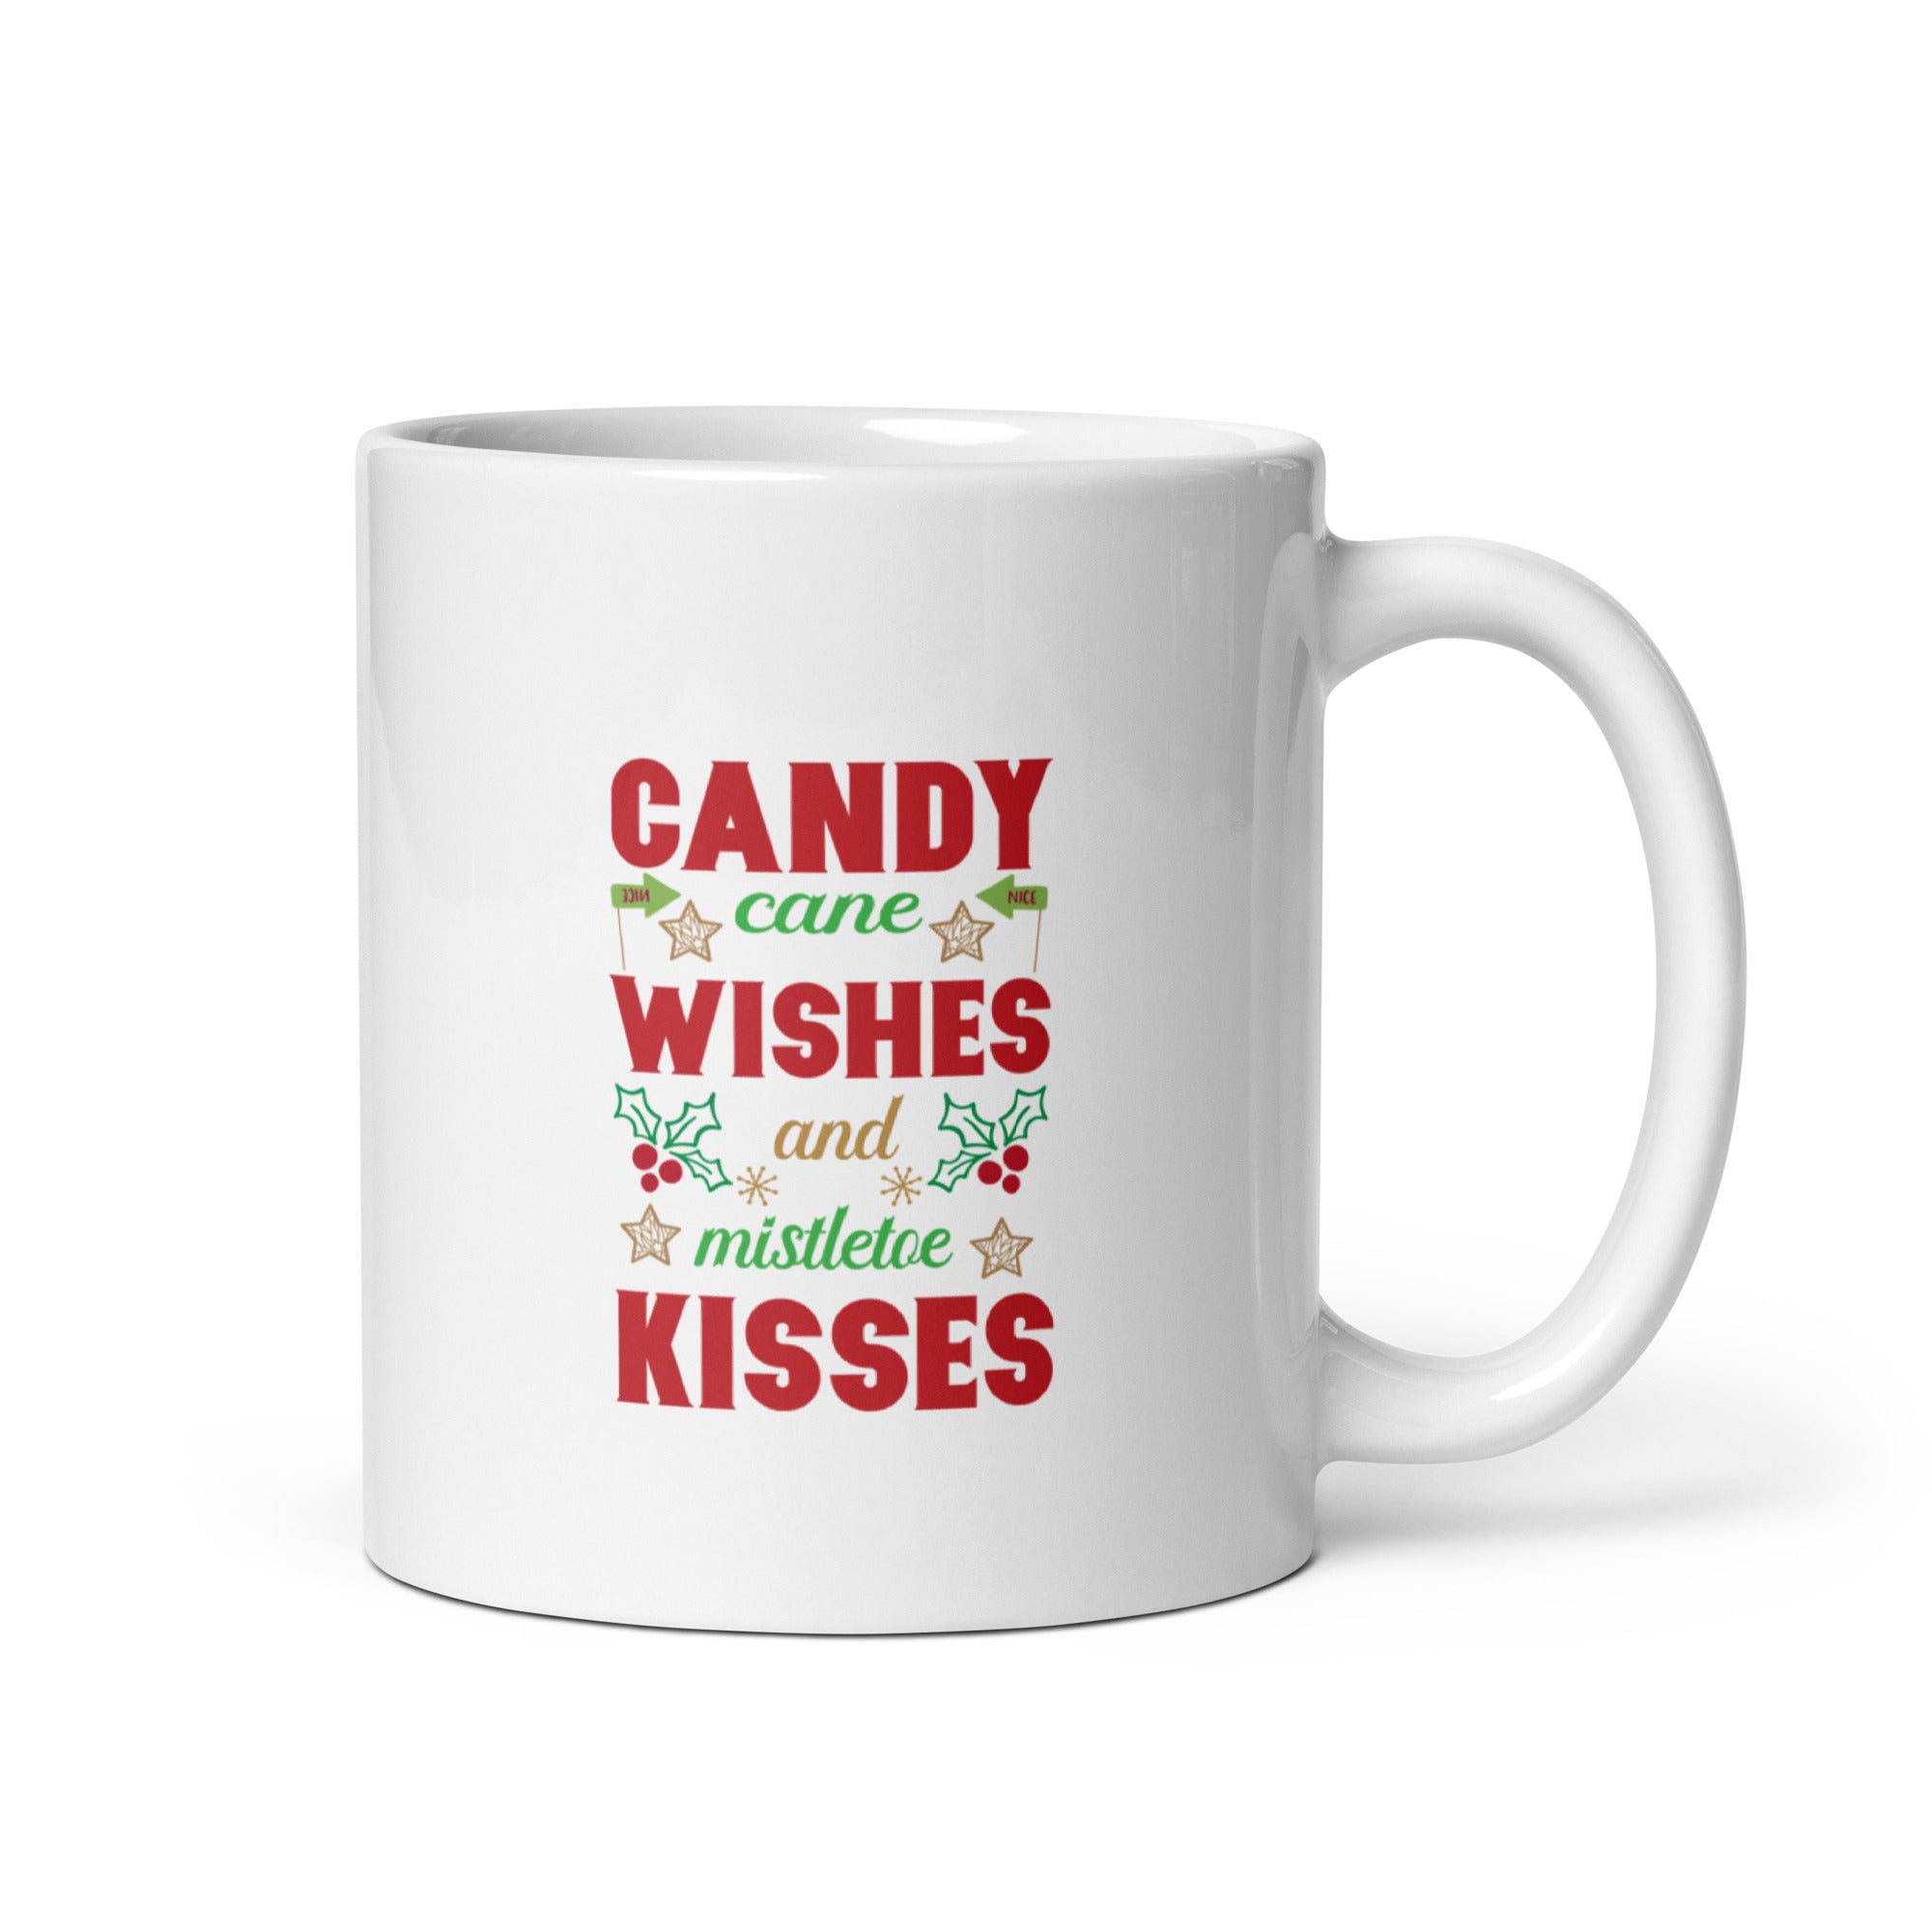 Candy Cane Wishes - White glossy mug